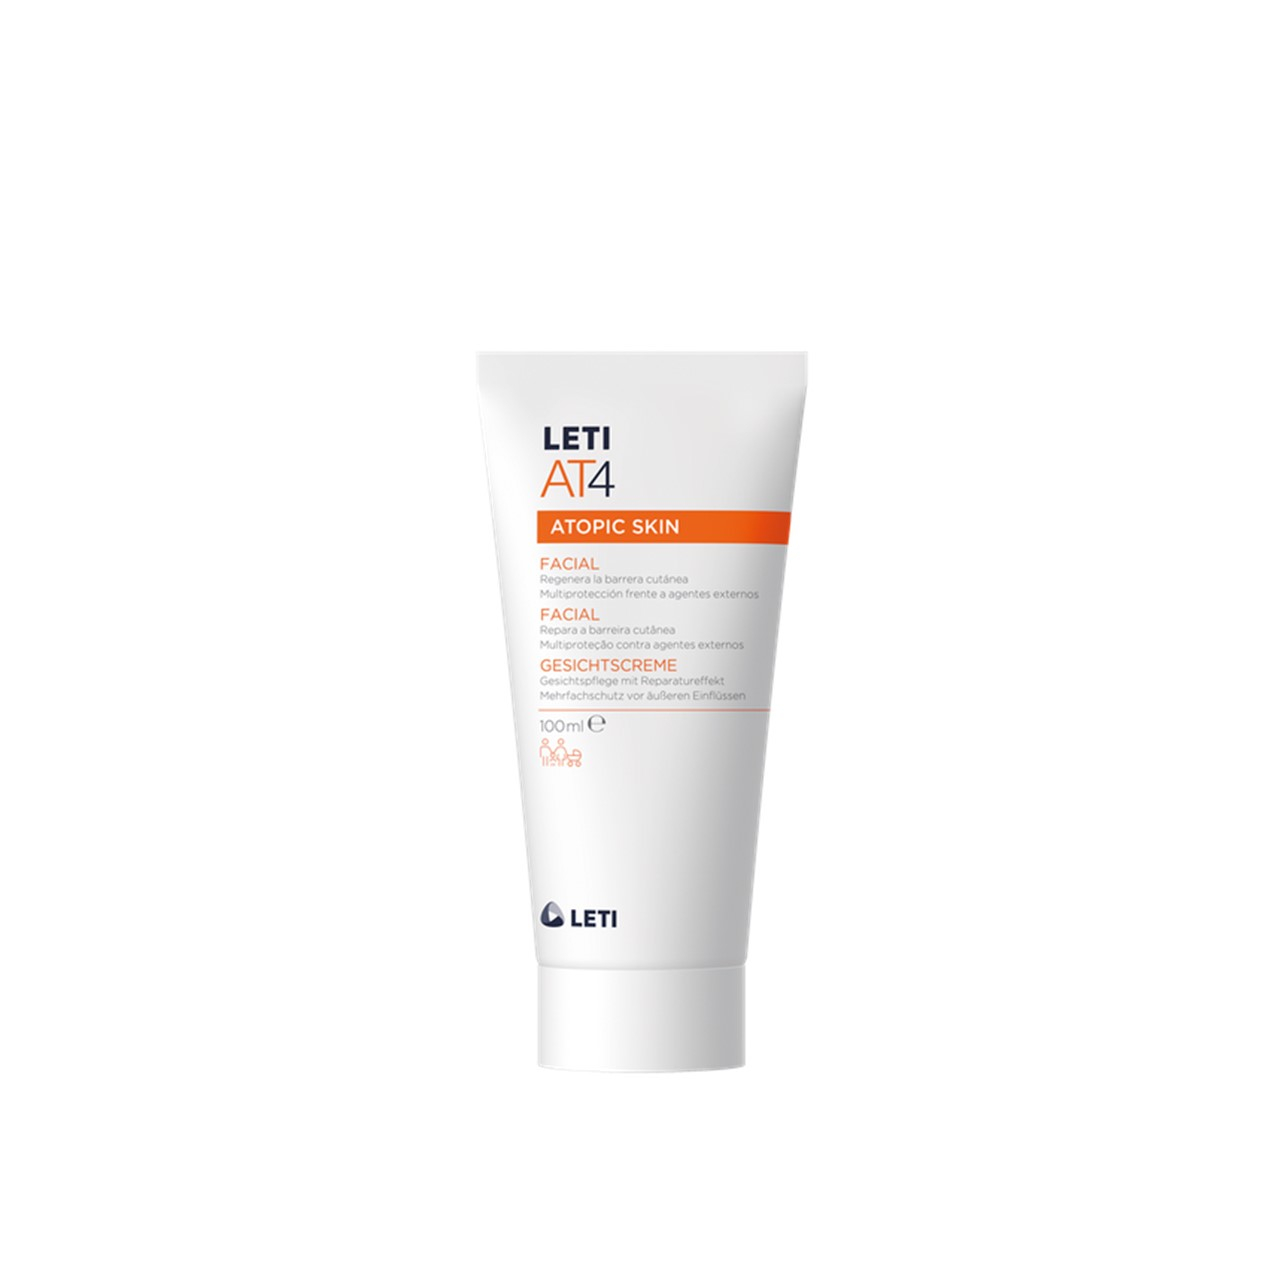 LETI AT4 Atopic Skin Facial Cream 100ml (3.38fl oz)